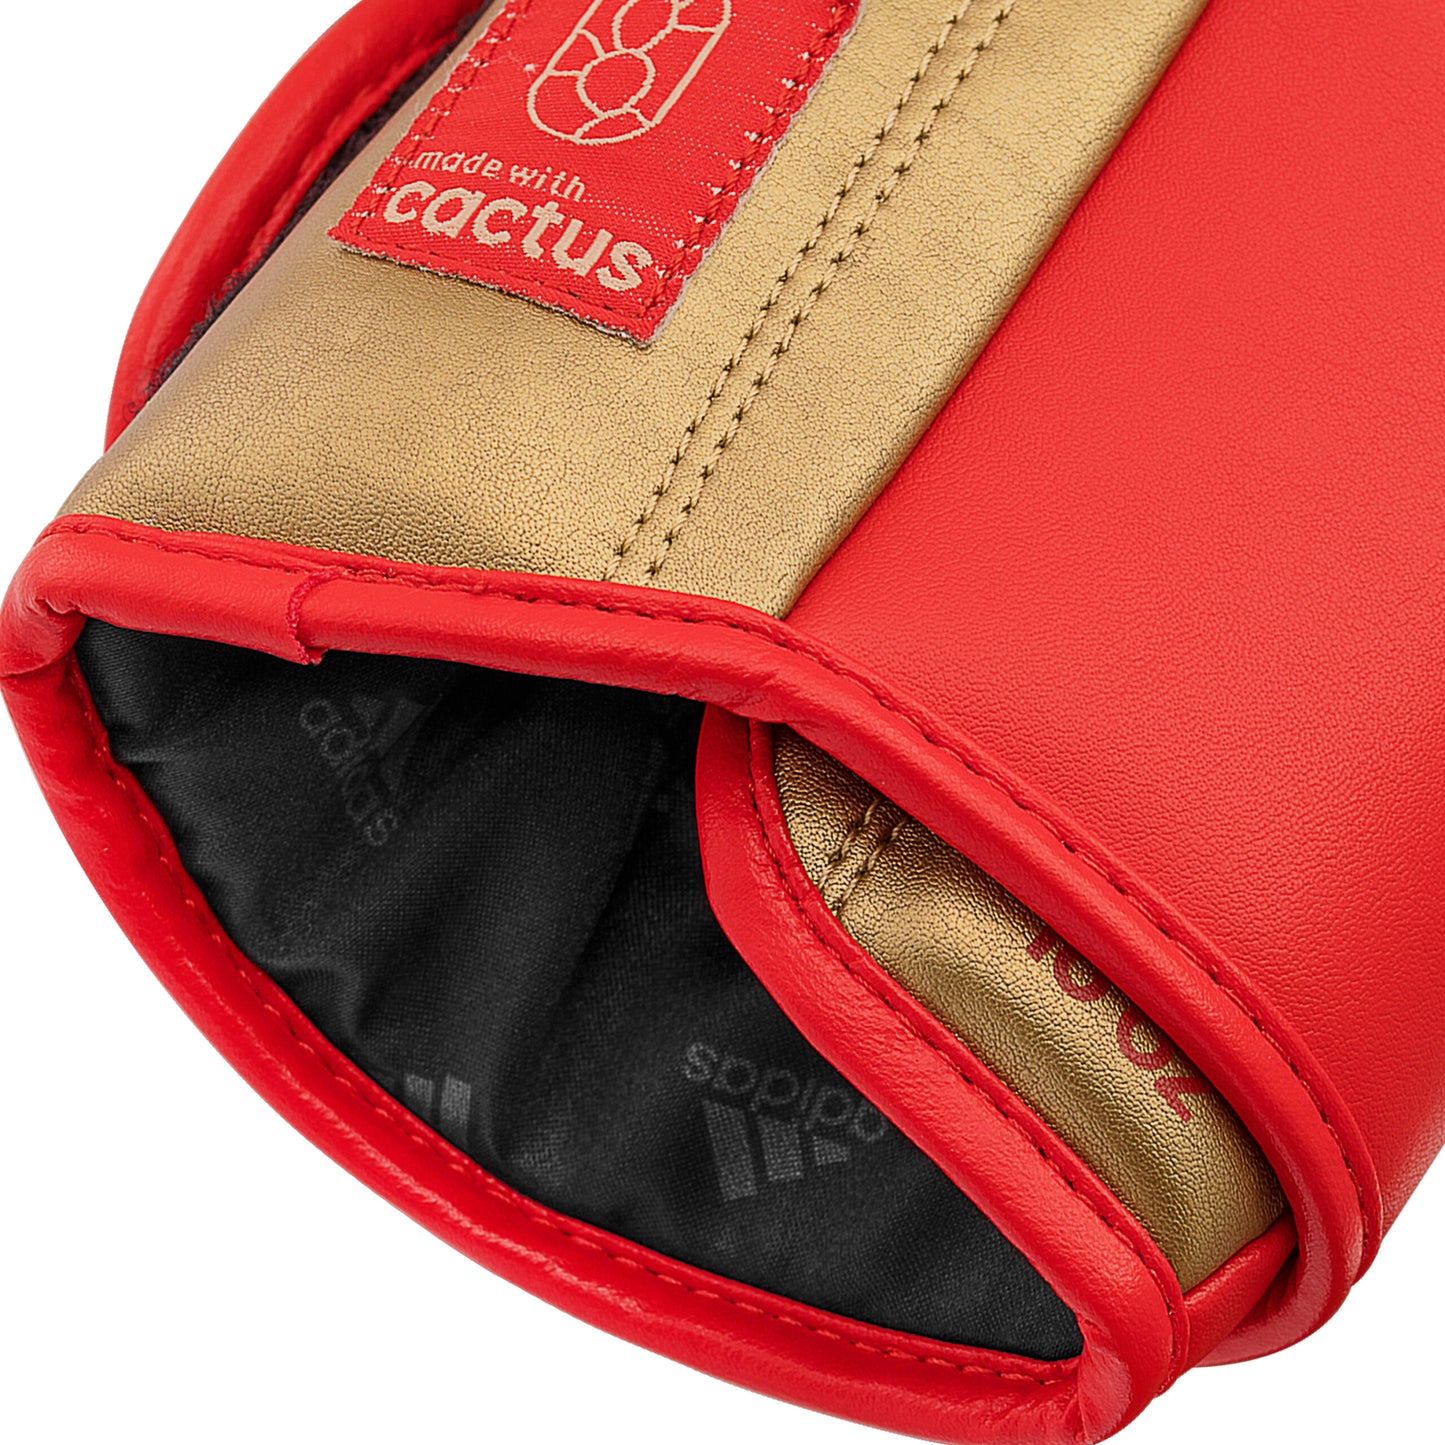 Adispd350tg Adidas Tilt 350 Pro Training Boxing Gloves Velcro Strap Red Gold 11